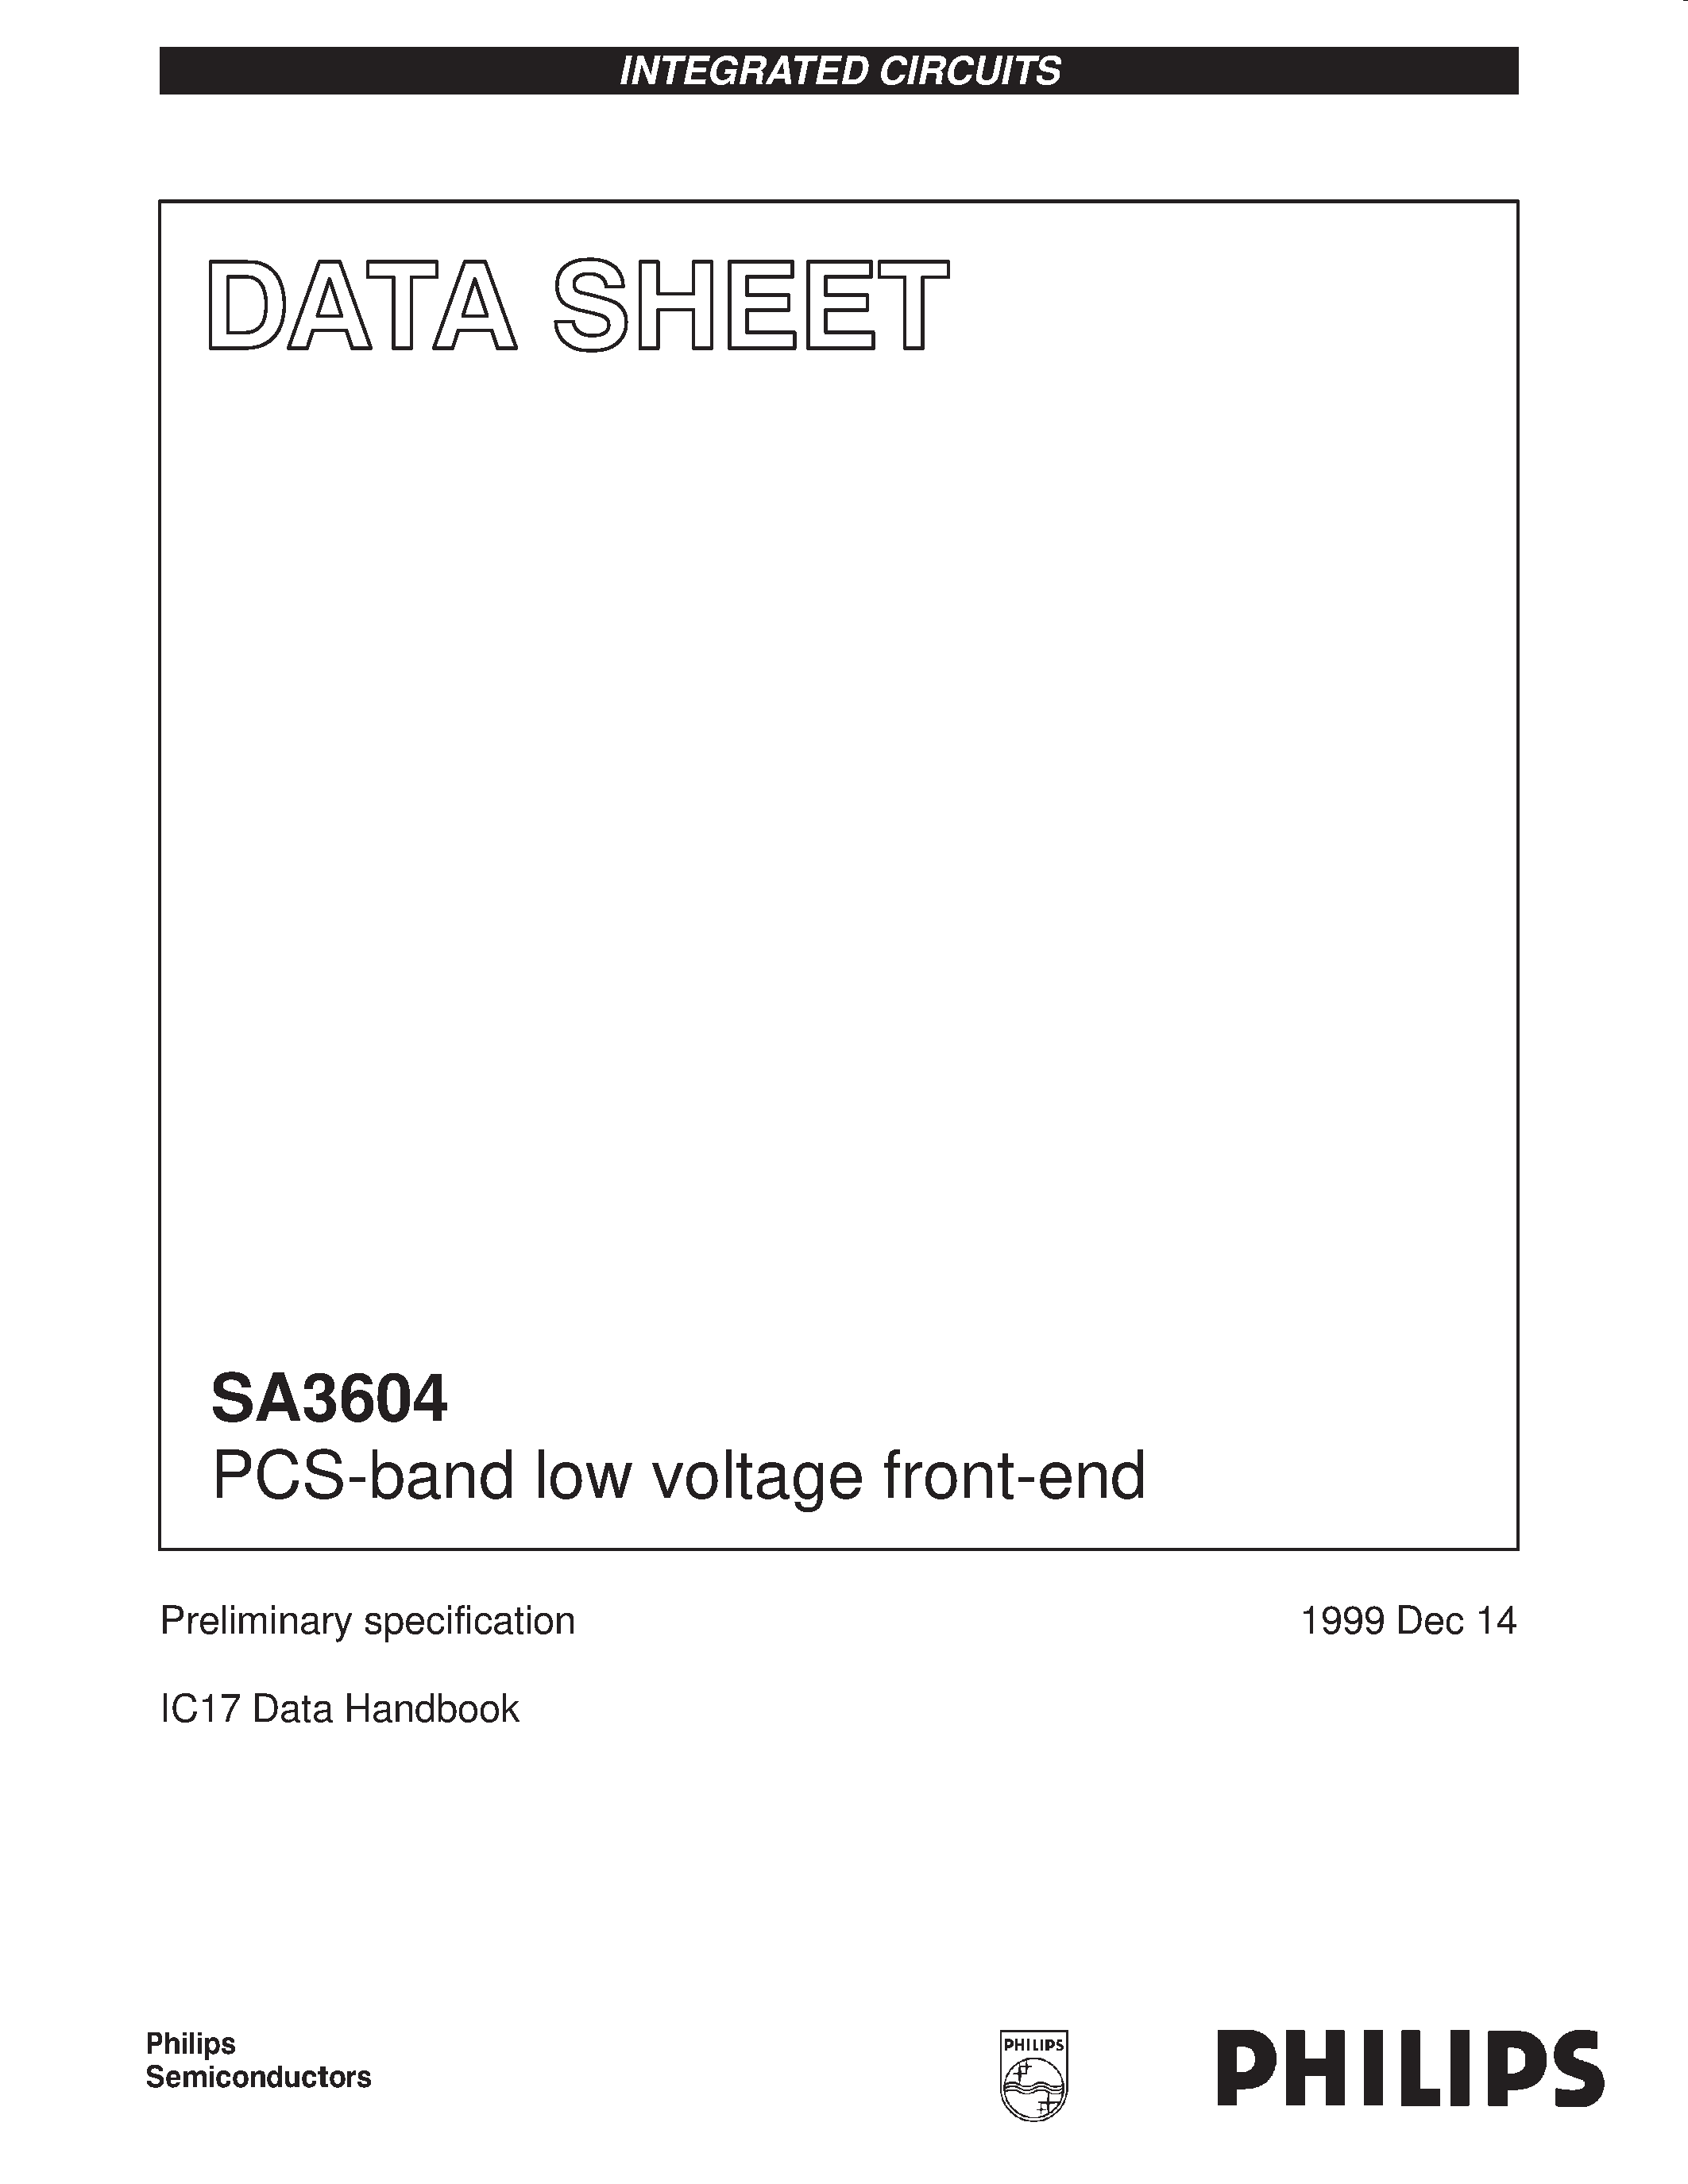 Даташит SA3604DH - PCS-band low voltage front-end страница 1